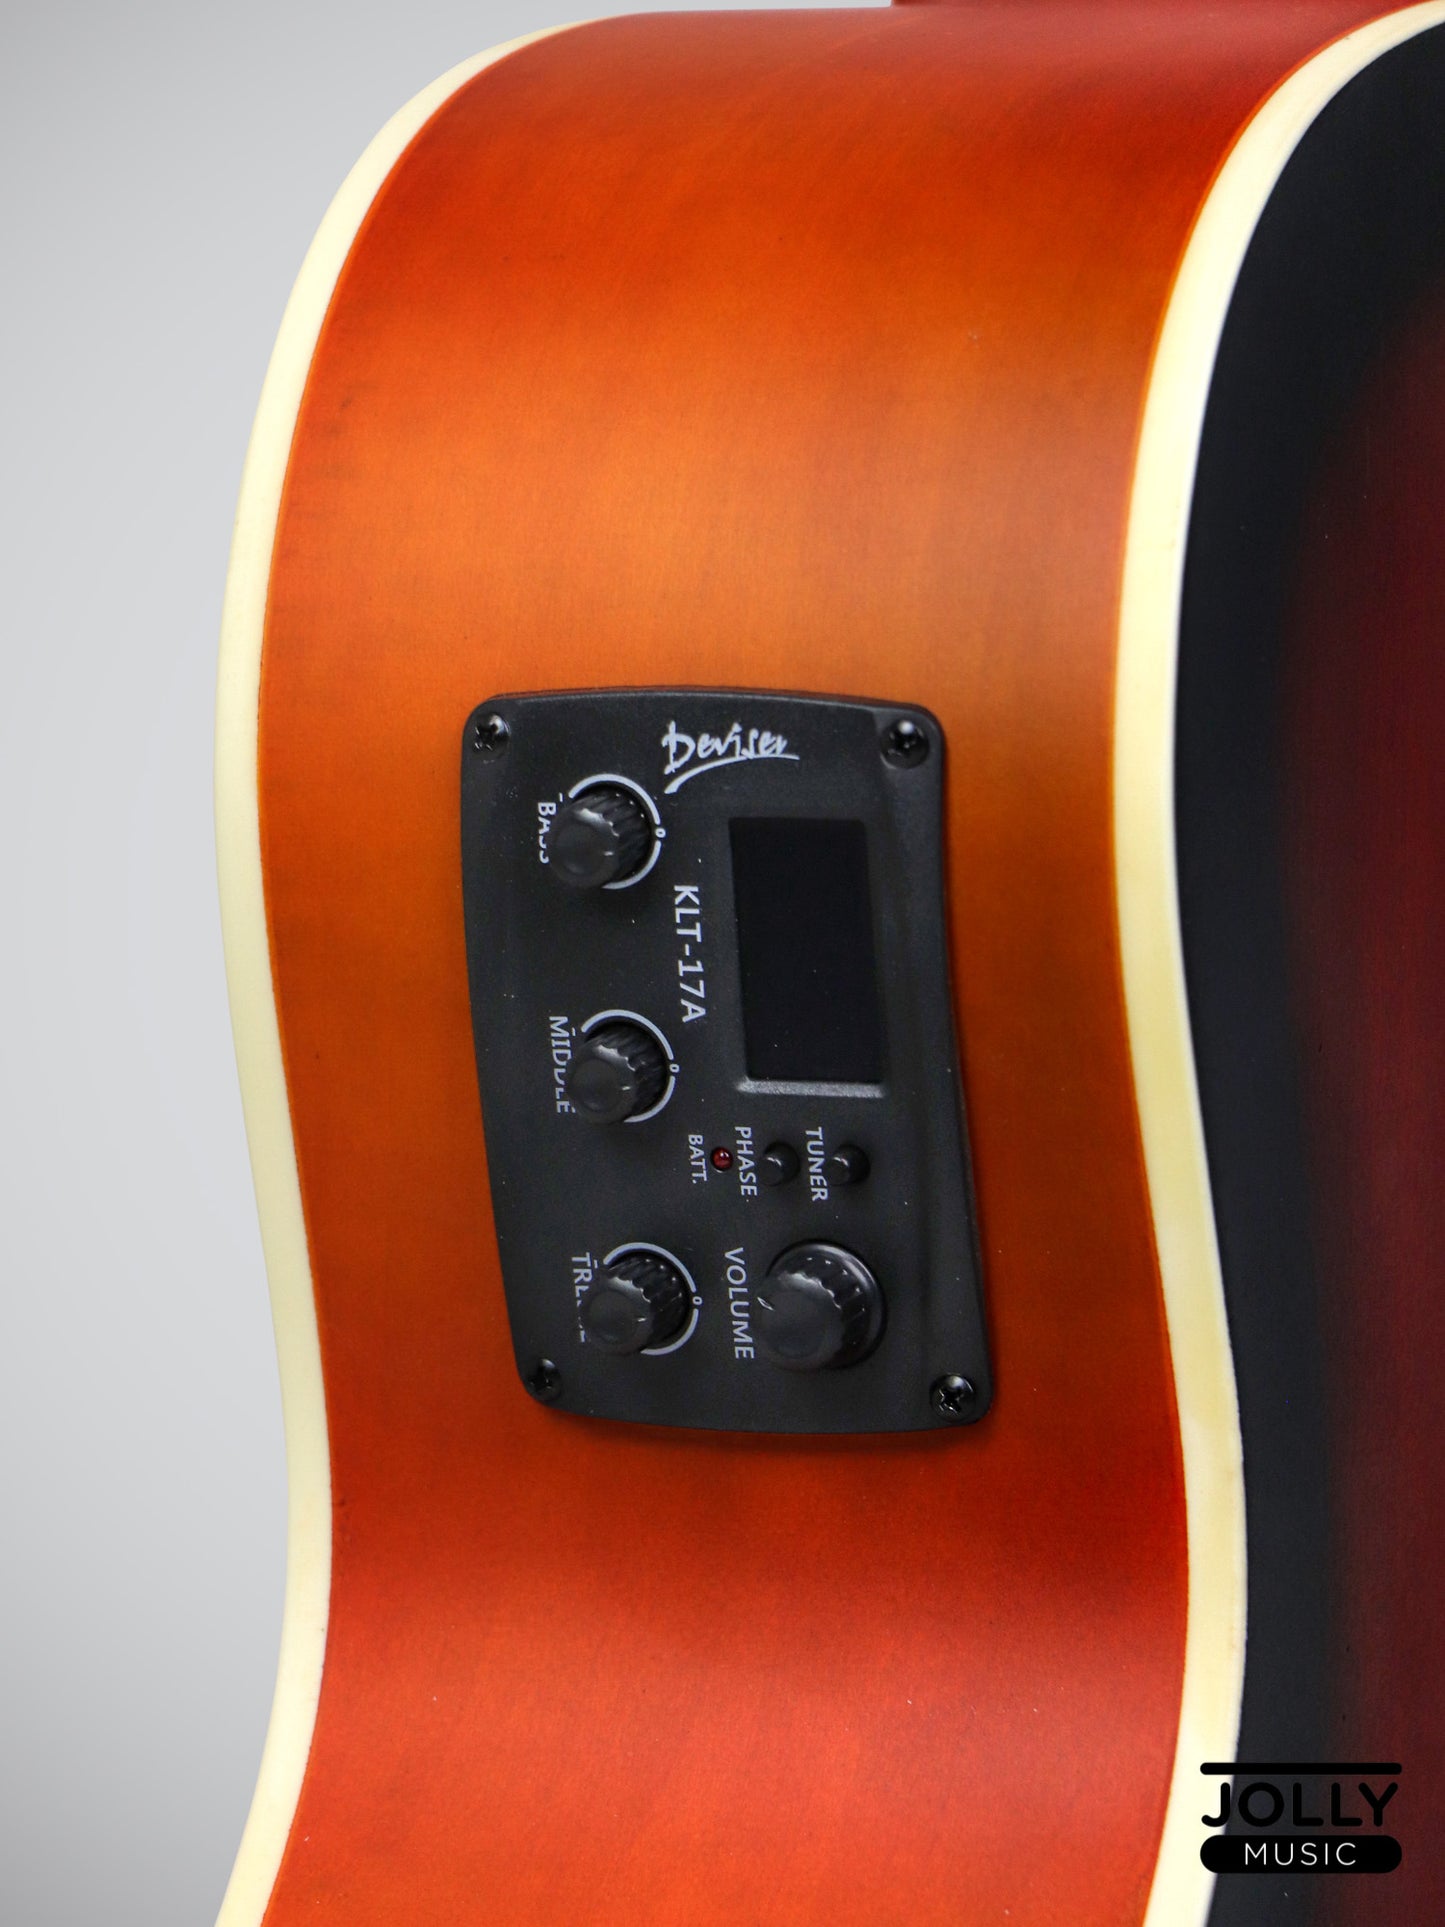 Caravan HS-4040 EQ Electric-Acoustic Guitar with FREE Gigbag and Pickup - Amber Sunburst